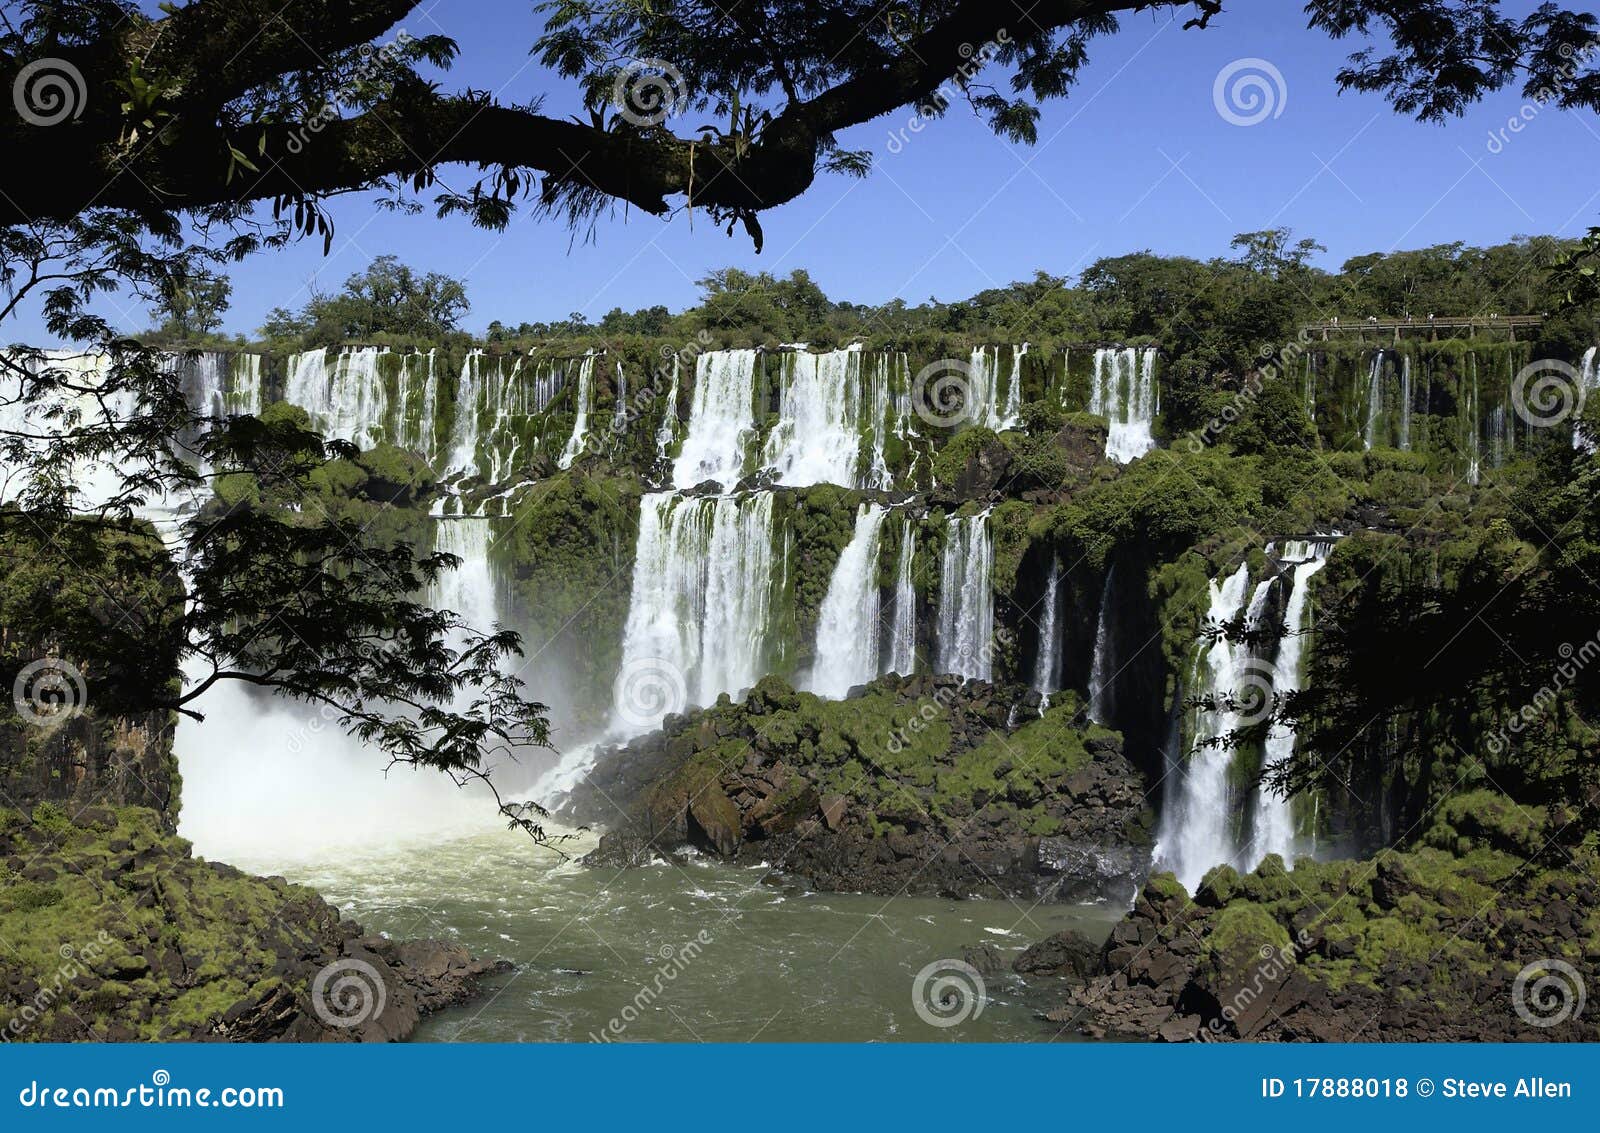 iguazu falls - argentina / brazil border